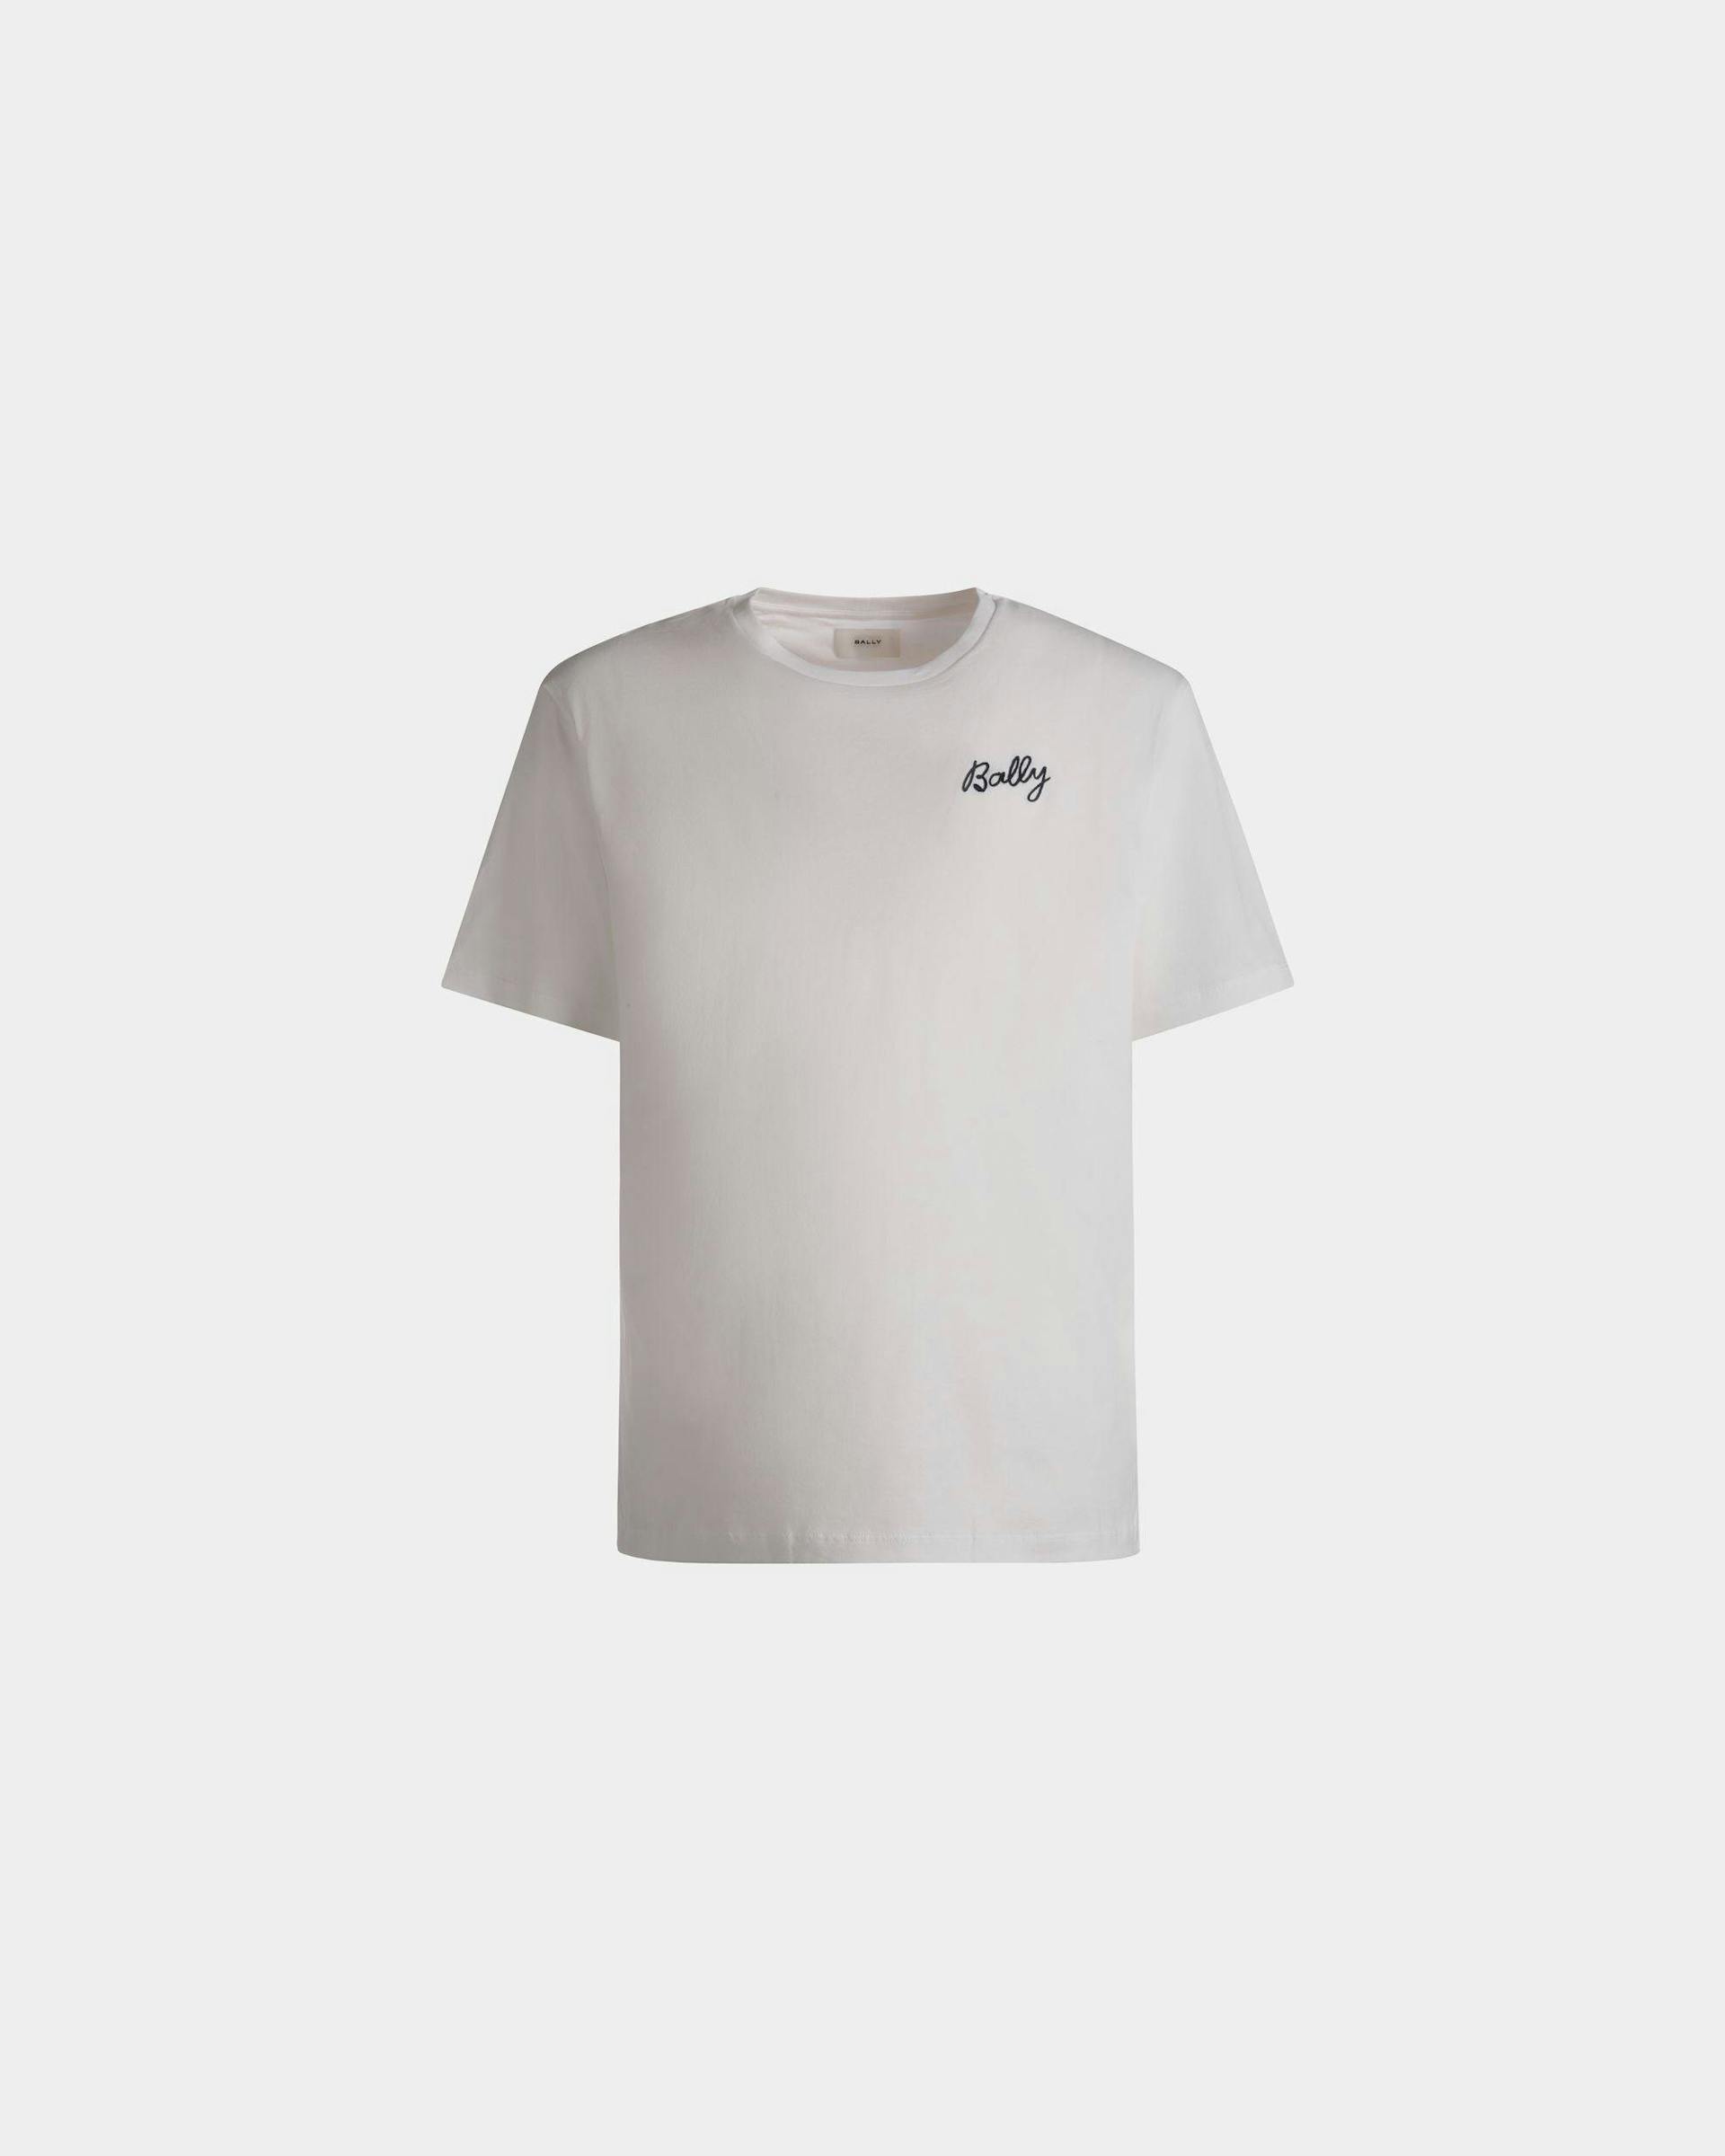 Men's T-Shirt in Cotton | Bally | Still Life Front